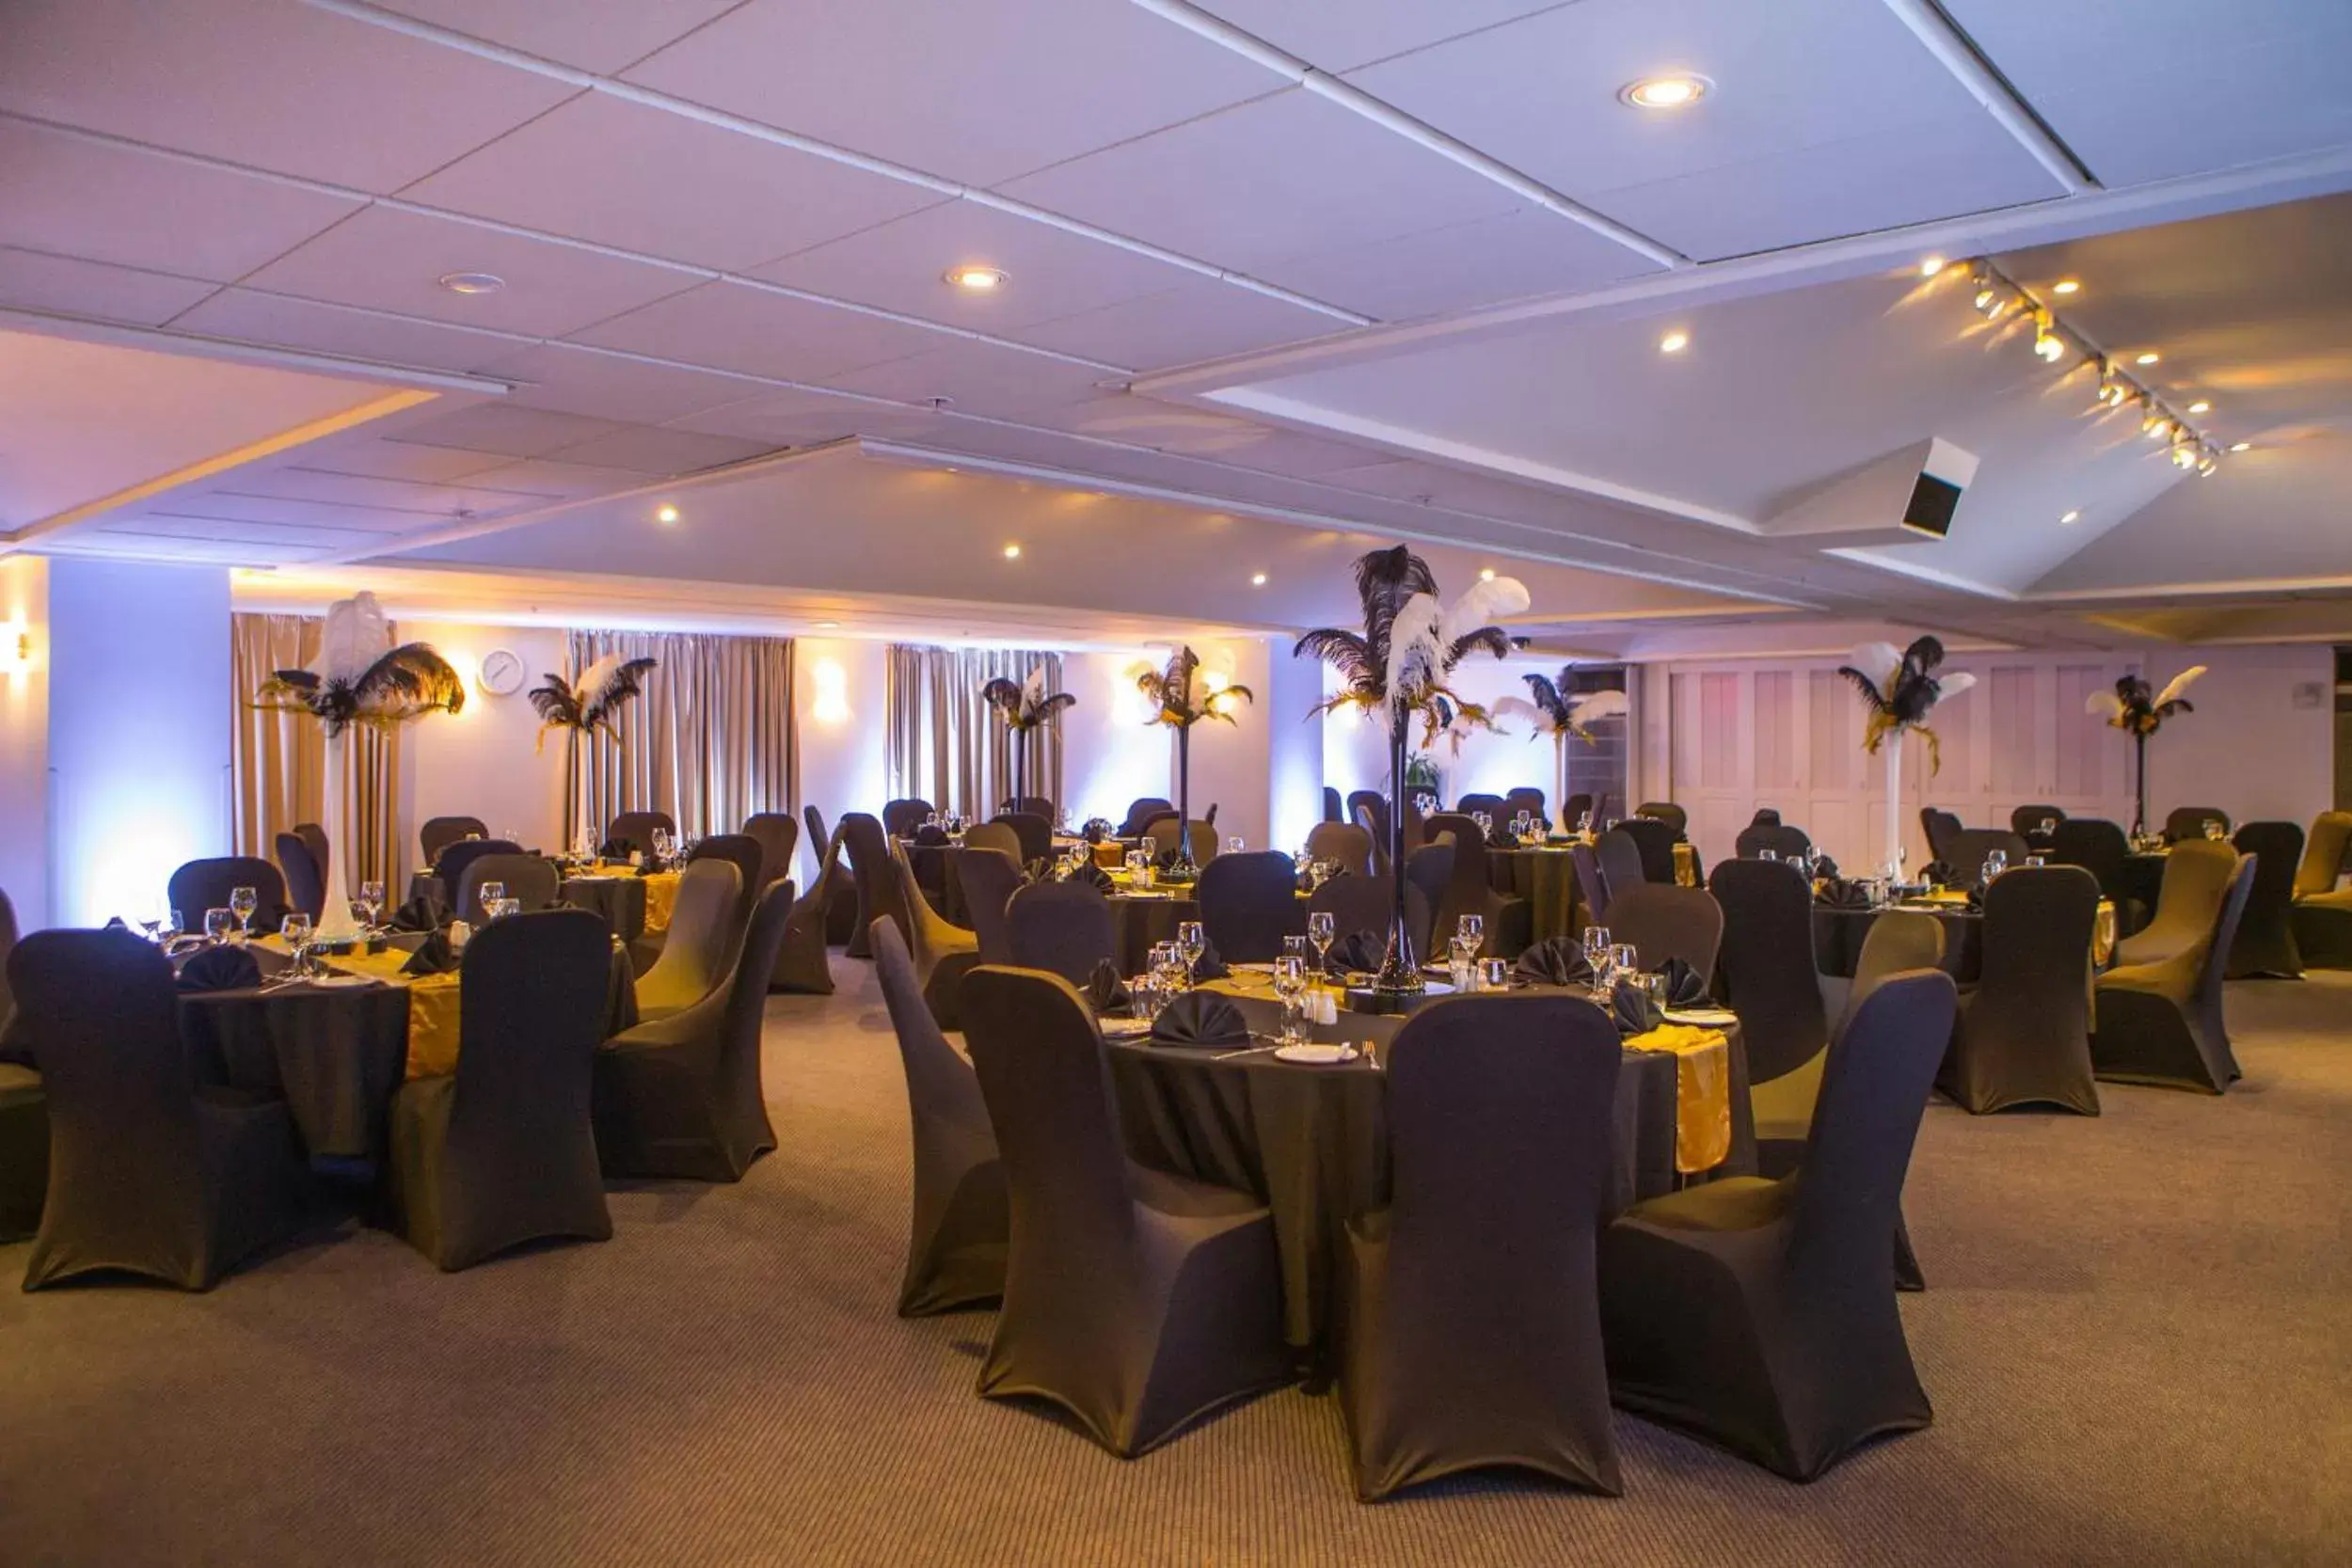 Banquet/Function facilities, Banquet Facilities in James Cook Hotel Grand Chancellor